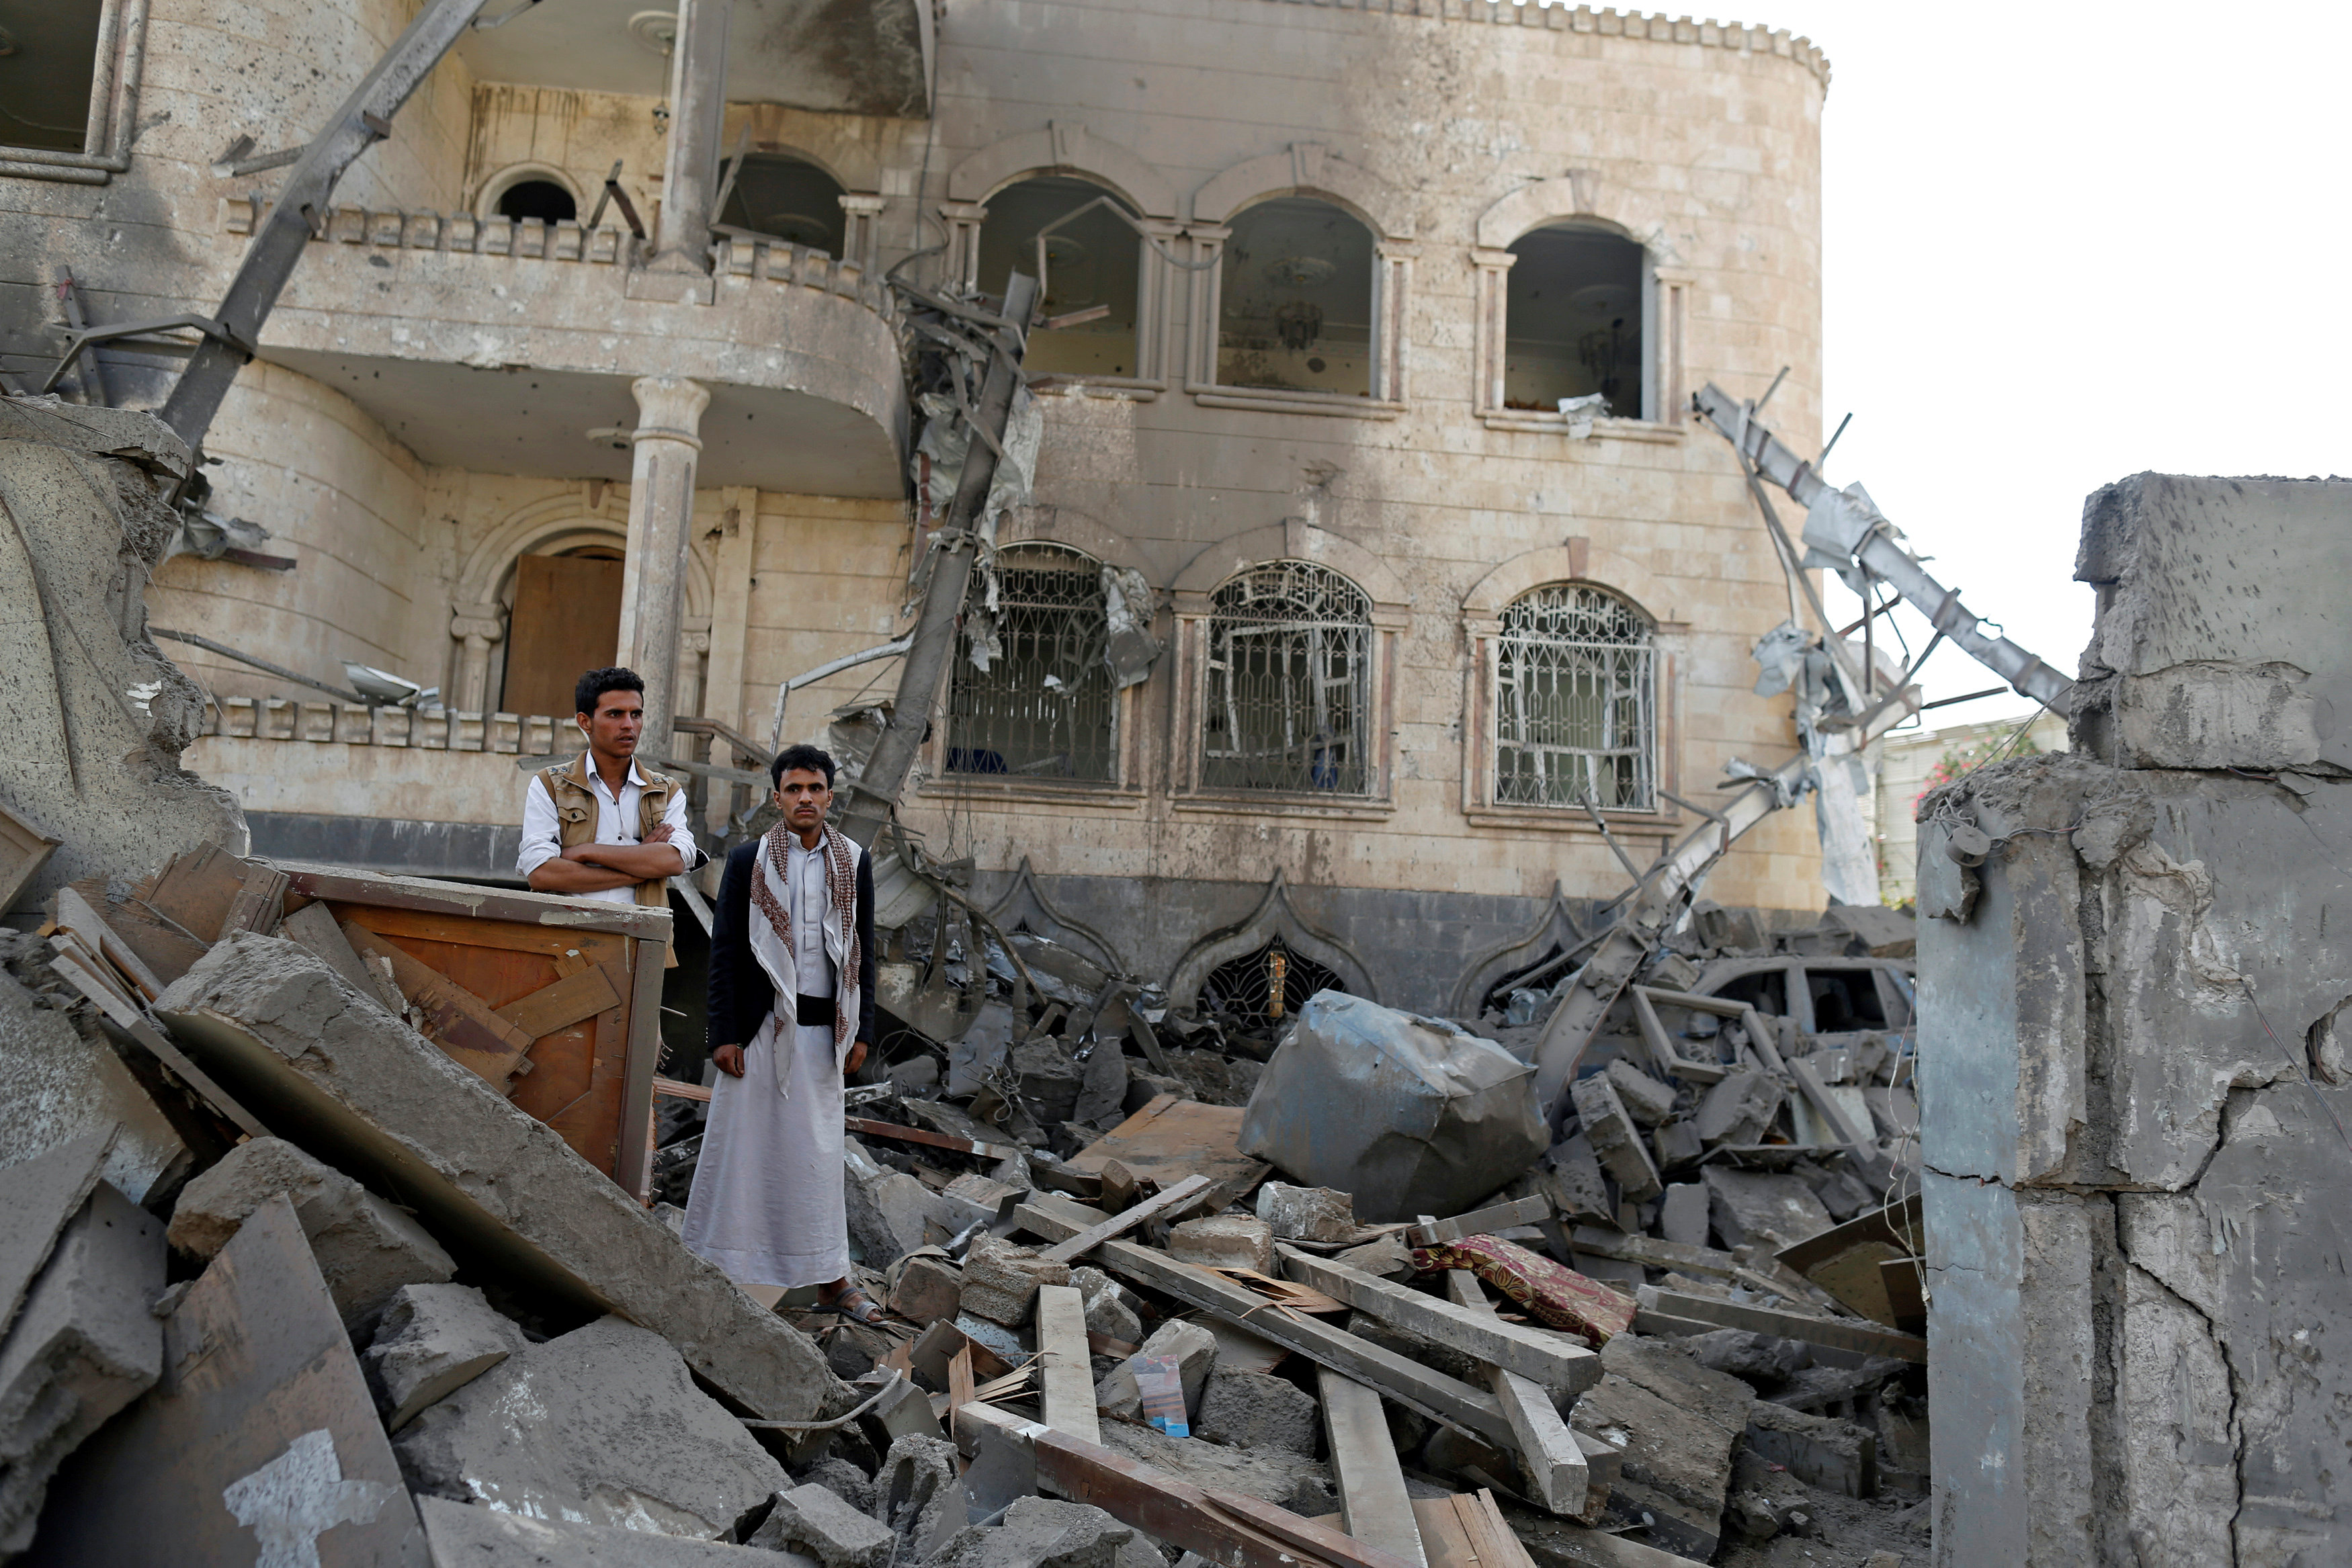 Suspected Al Qaeda militants attack Yemen army camp, 12 dead, says military official